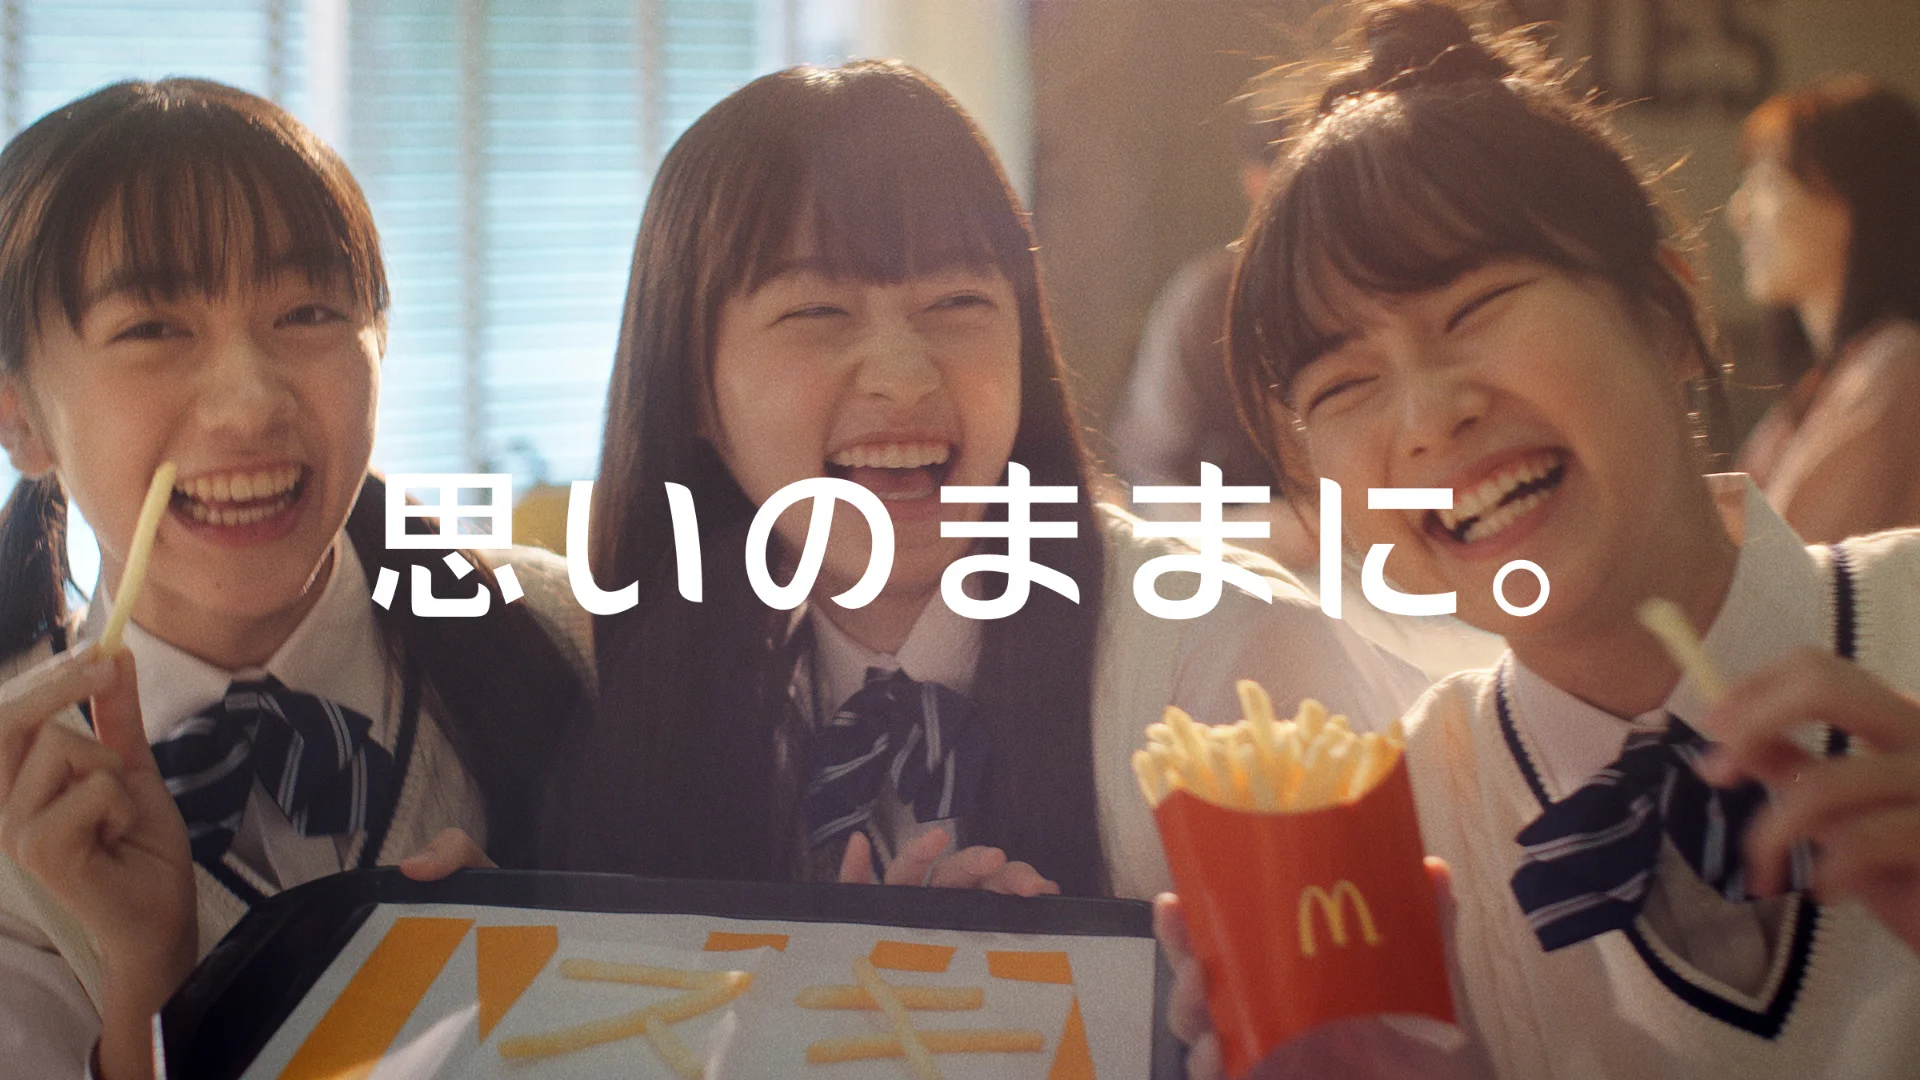 McDonalds - Fries2019 on Vimeo